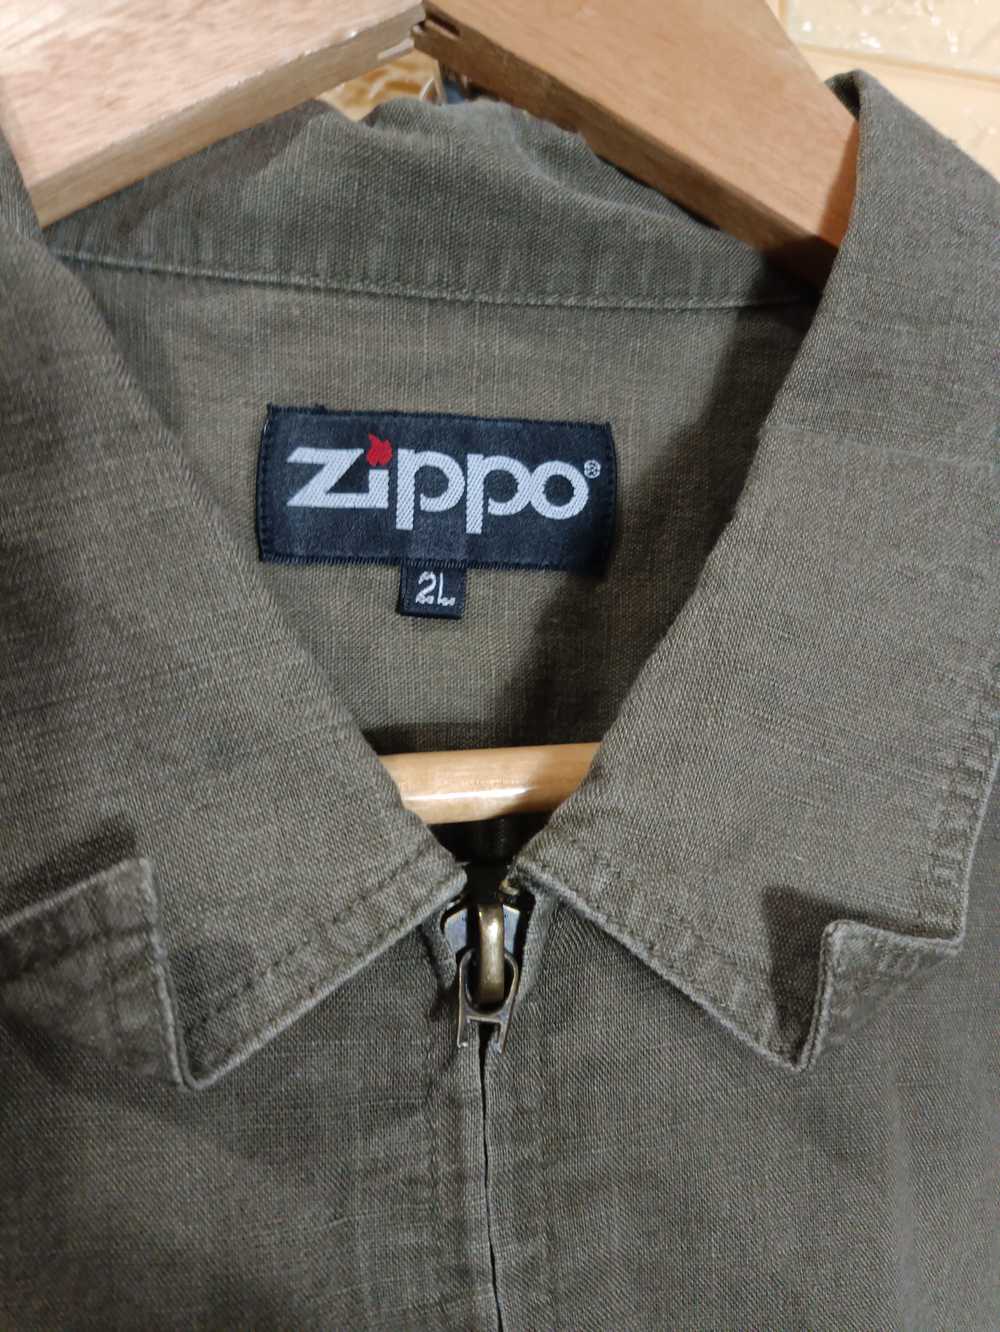 Zippo - Zippo Zipper Jacket - image 6